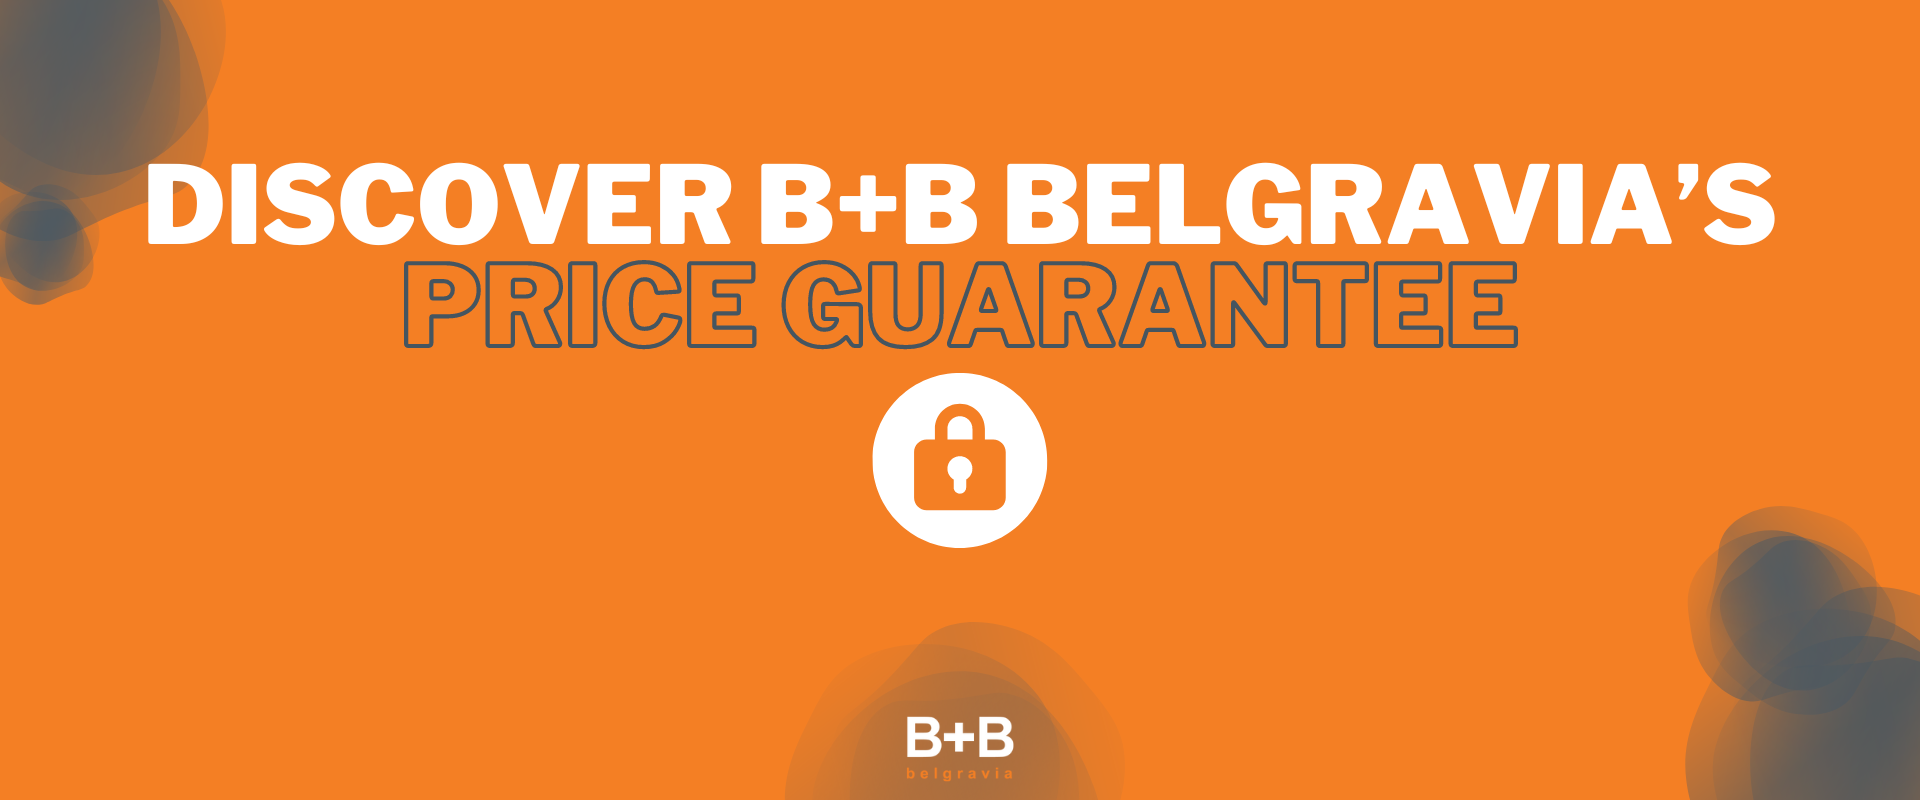 B+B Belgravia's Price Guarantee